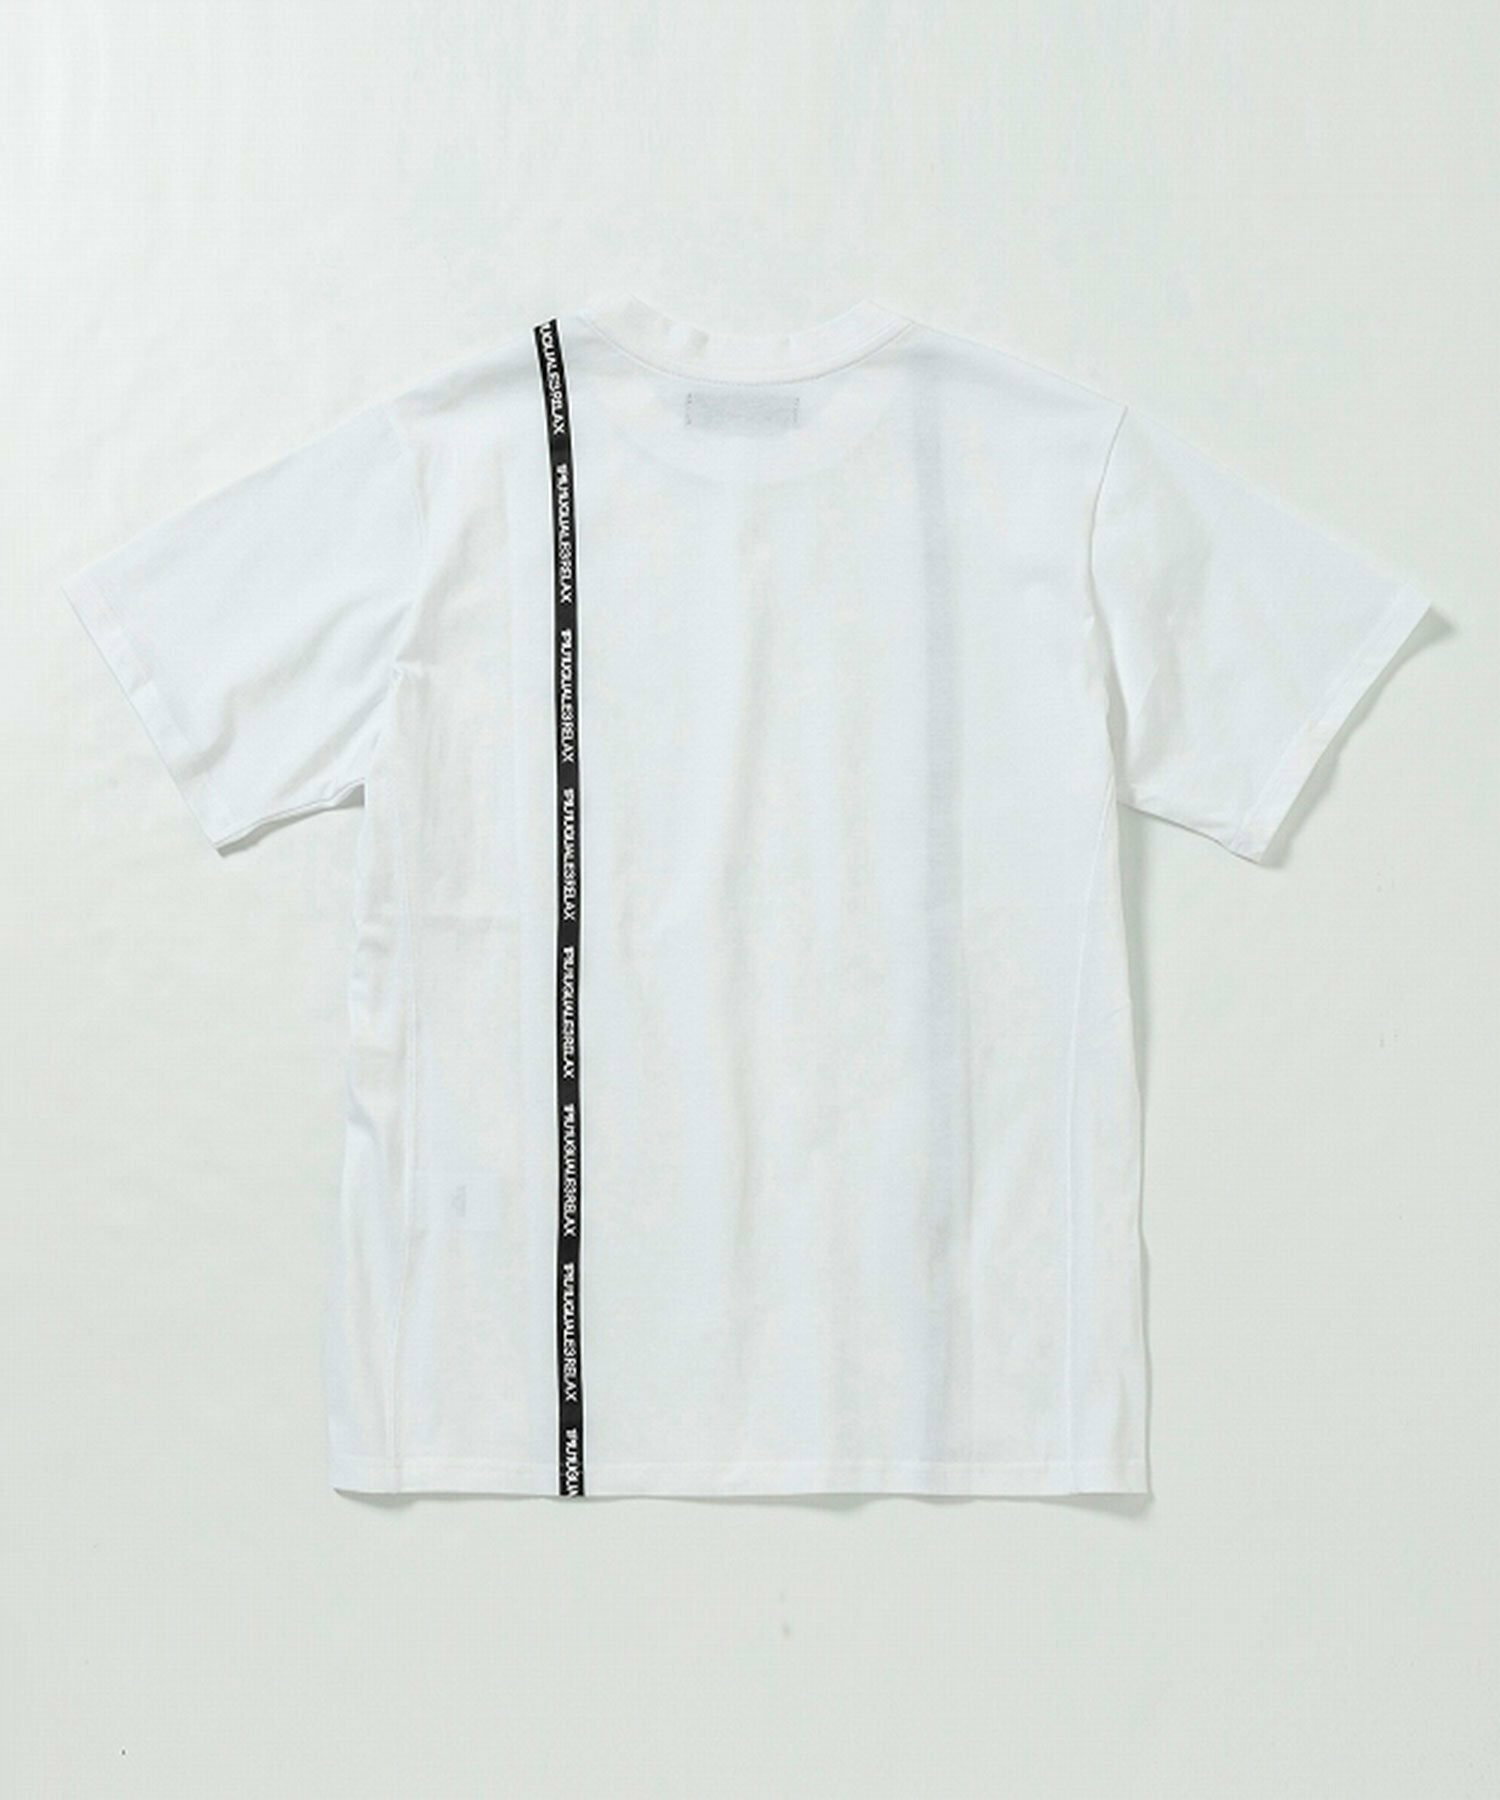 (M)1PIU1UGUALE3 RELAX/UST-24006 ラインロゴ半袖Tシャツ